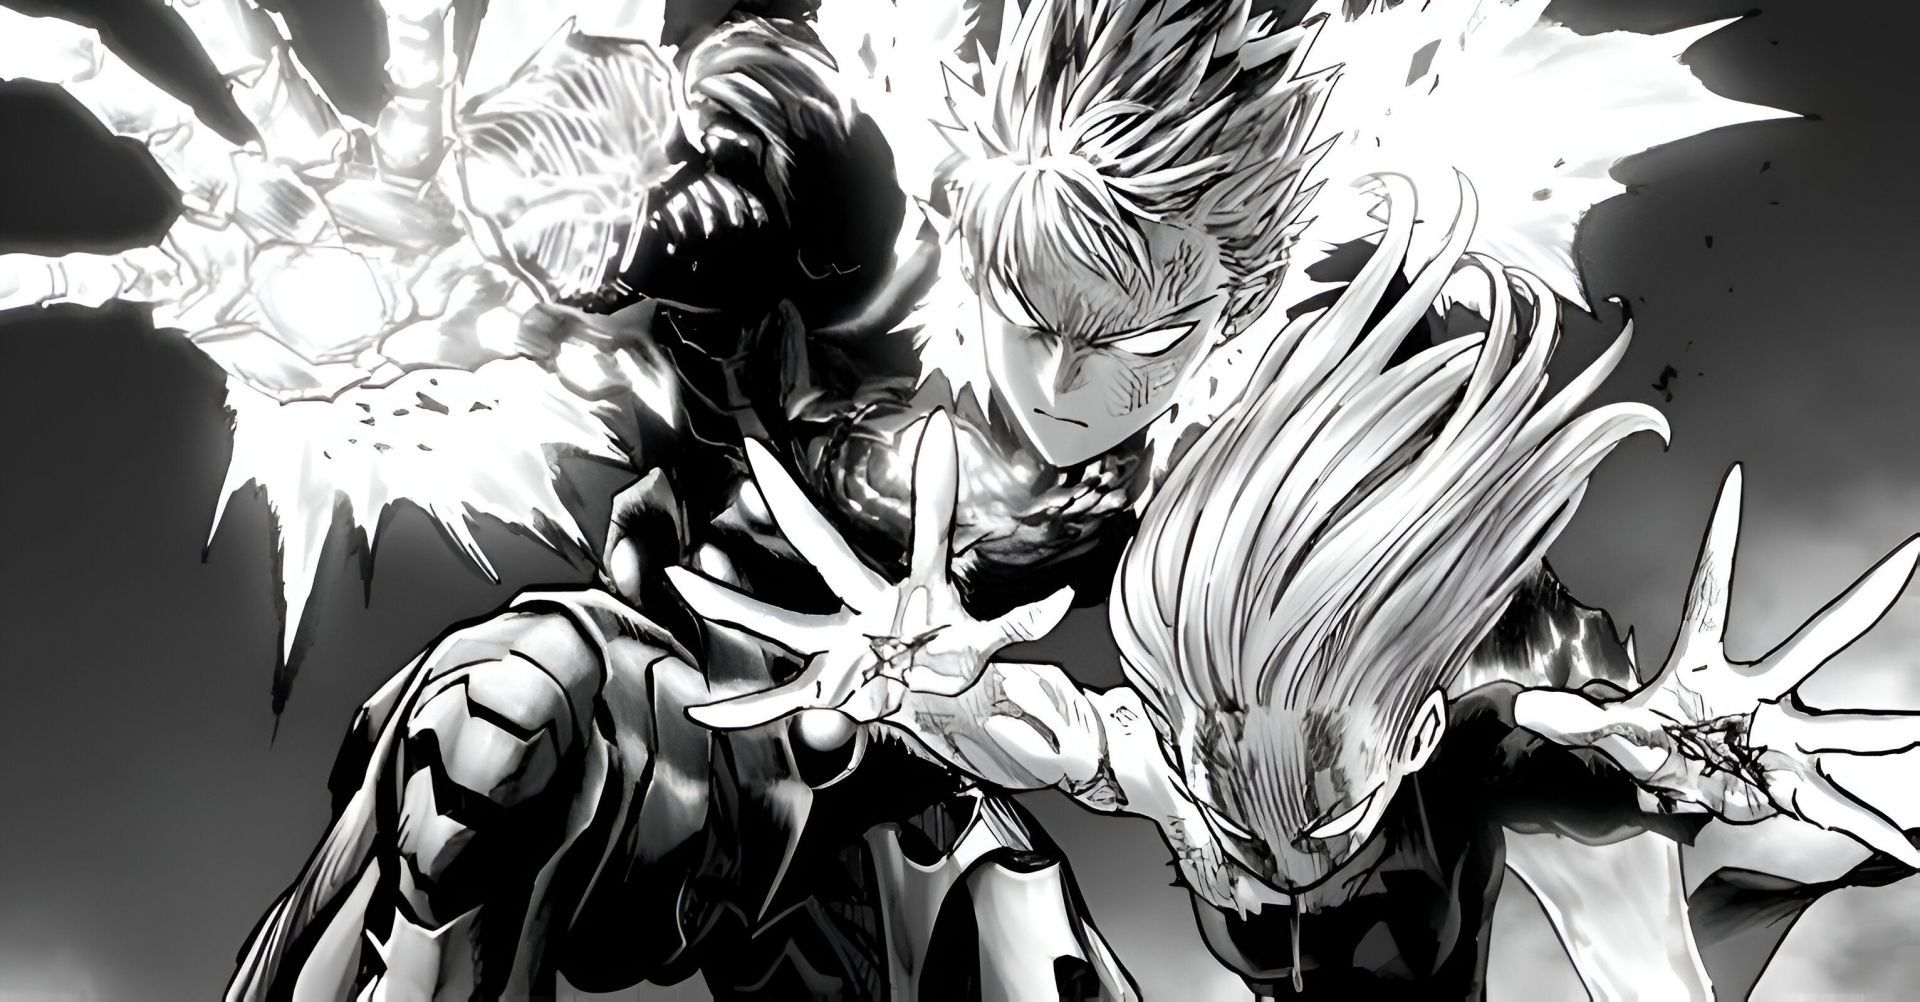 Genos (left) fighting alongside Tatsumaki (right) (Image via VIZ Media)